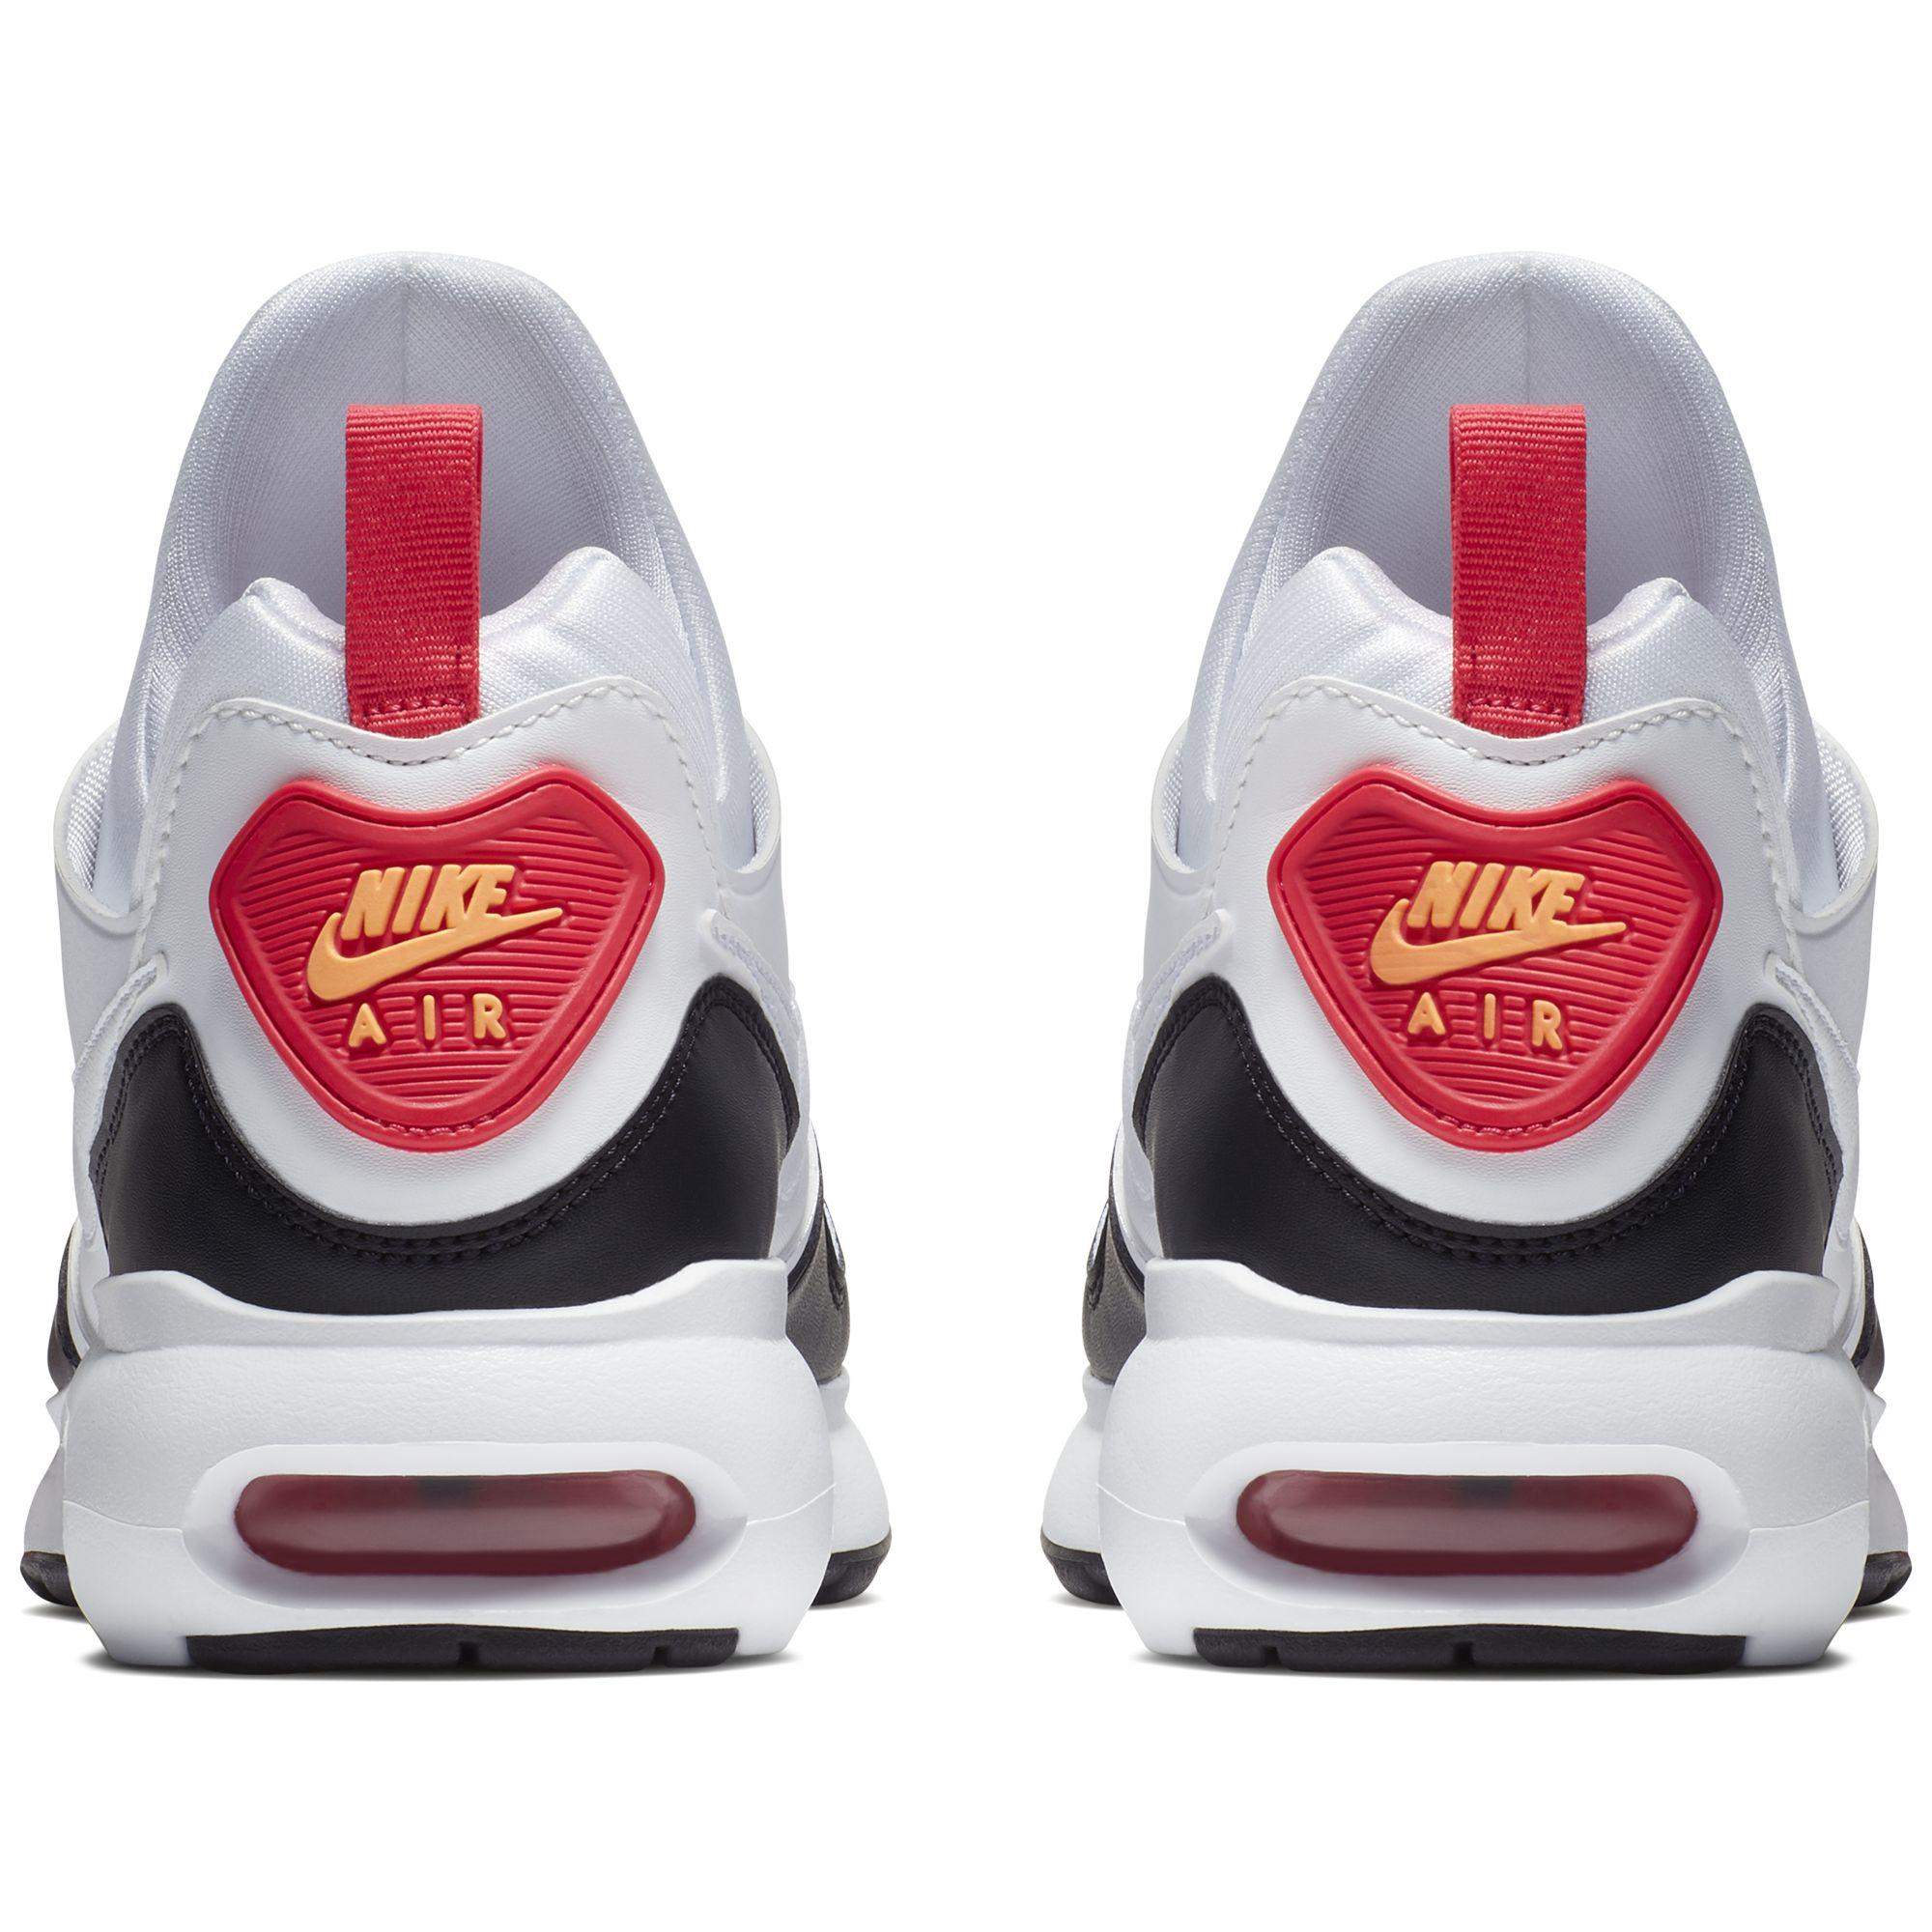 simplemente Filosófico sexual Nike Mens Air Max Prime Shoes - White/Siren Red/Black - Tennisnuts.com